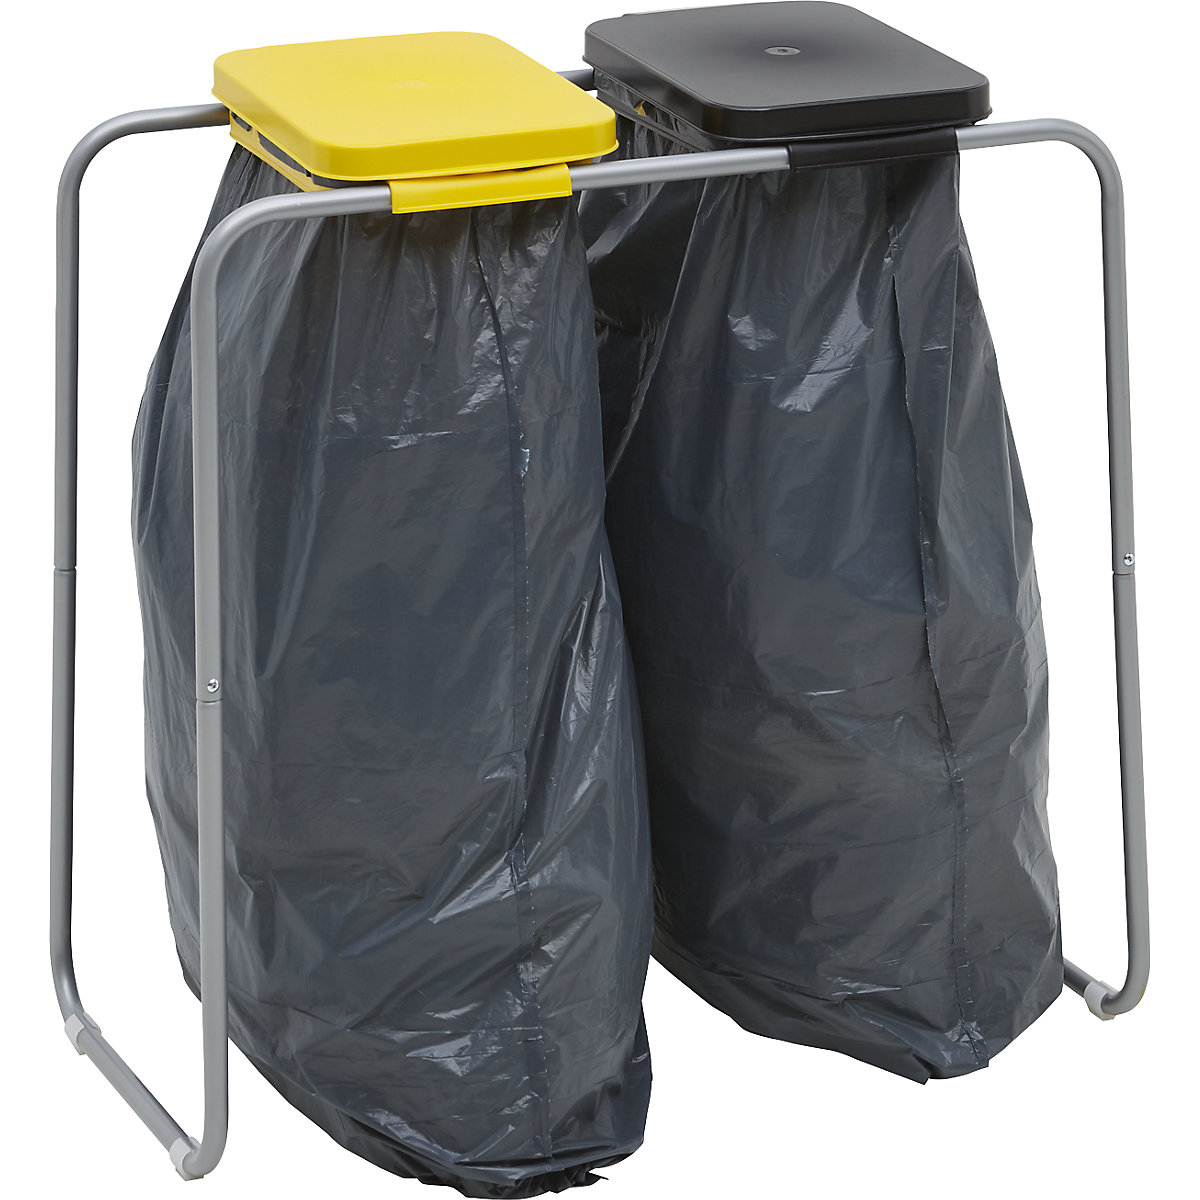 Porta-sacchi per rifiuti – eurokraft basic: per capacità max. 2 x